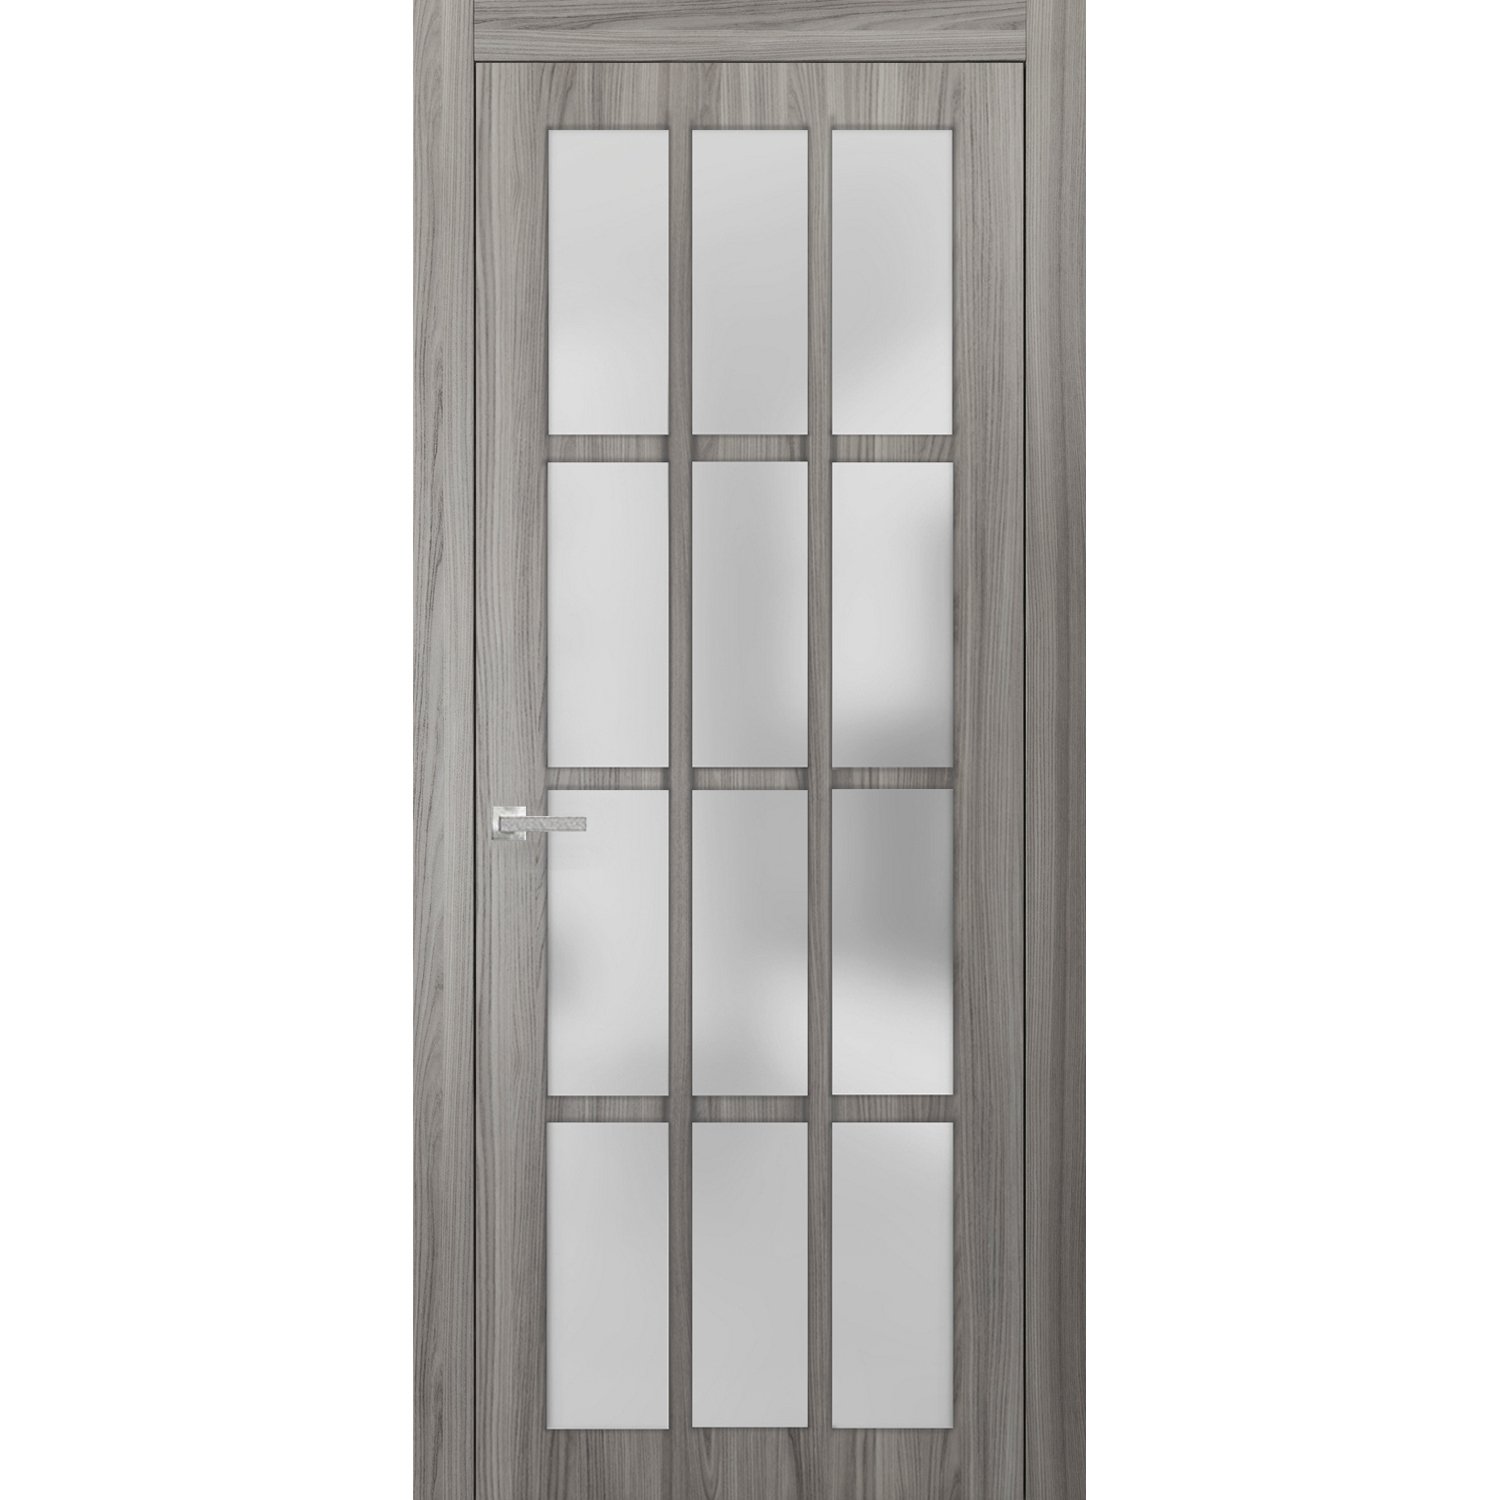 Solid French Door Frosted Glass 12 Lites | Felicia 3312 Ginger Ash | Single Regural Panel Frame Trims Handle | Bathroom Bedroom Sturdy Doors 